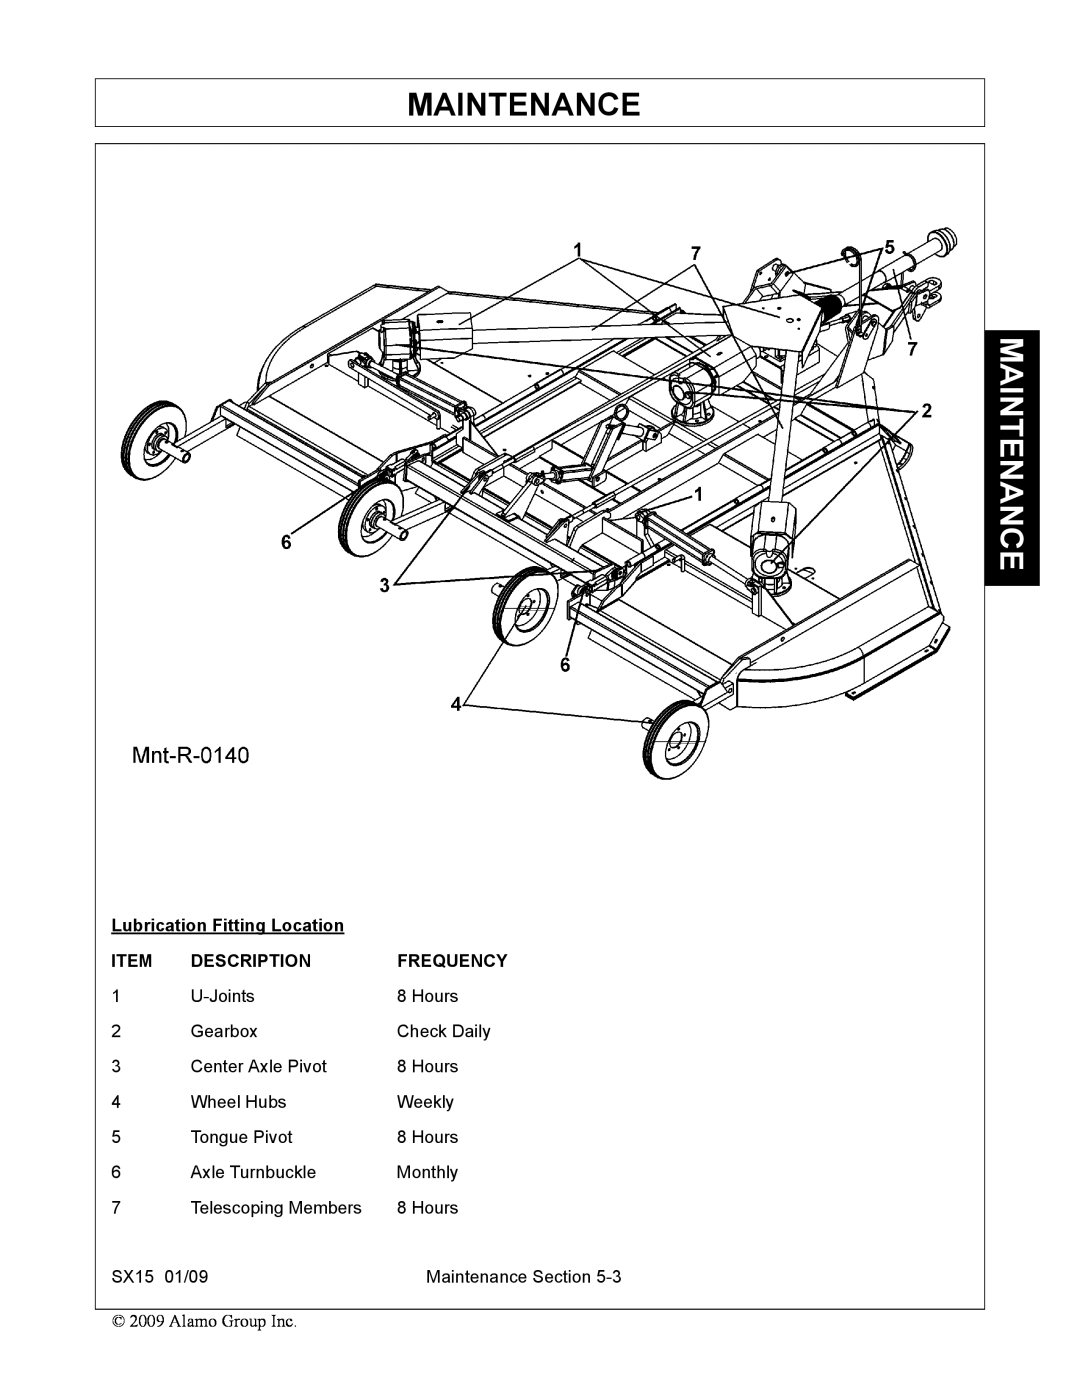 Alamo SX15 manual Maintenance, Lubrication Fitting Location, Description, Frequency 